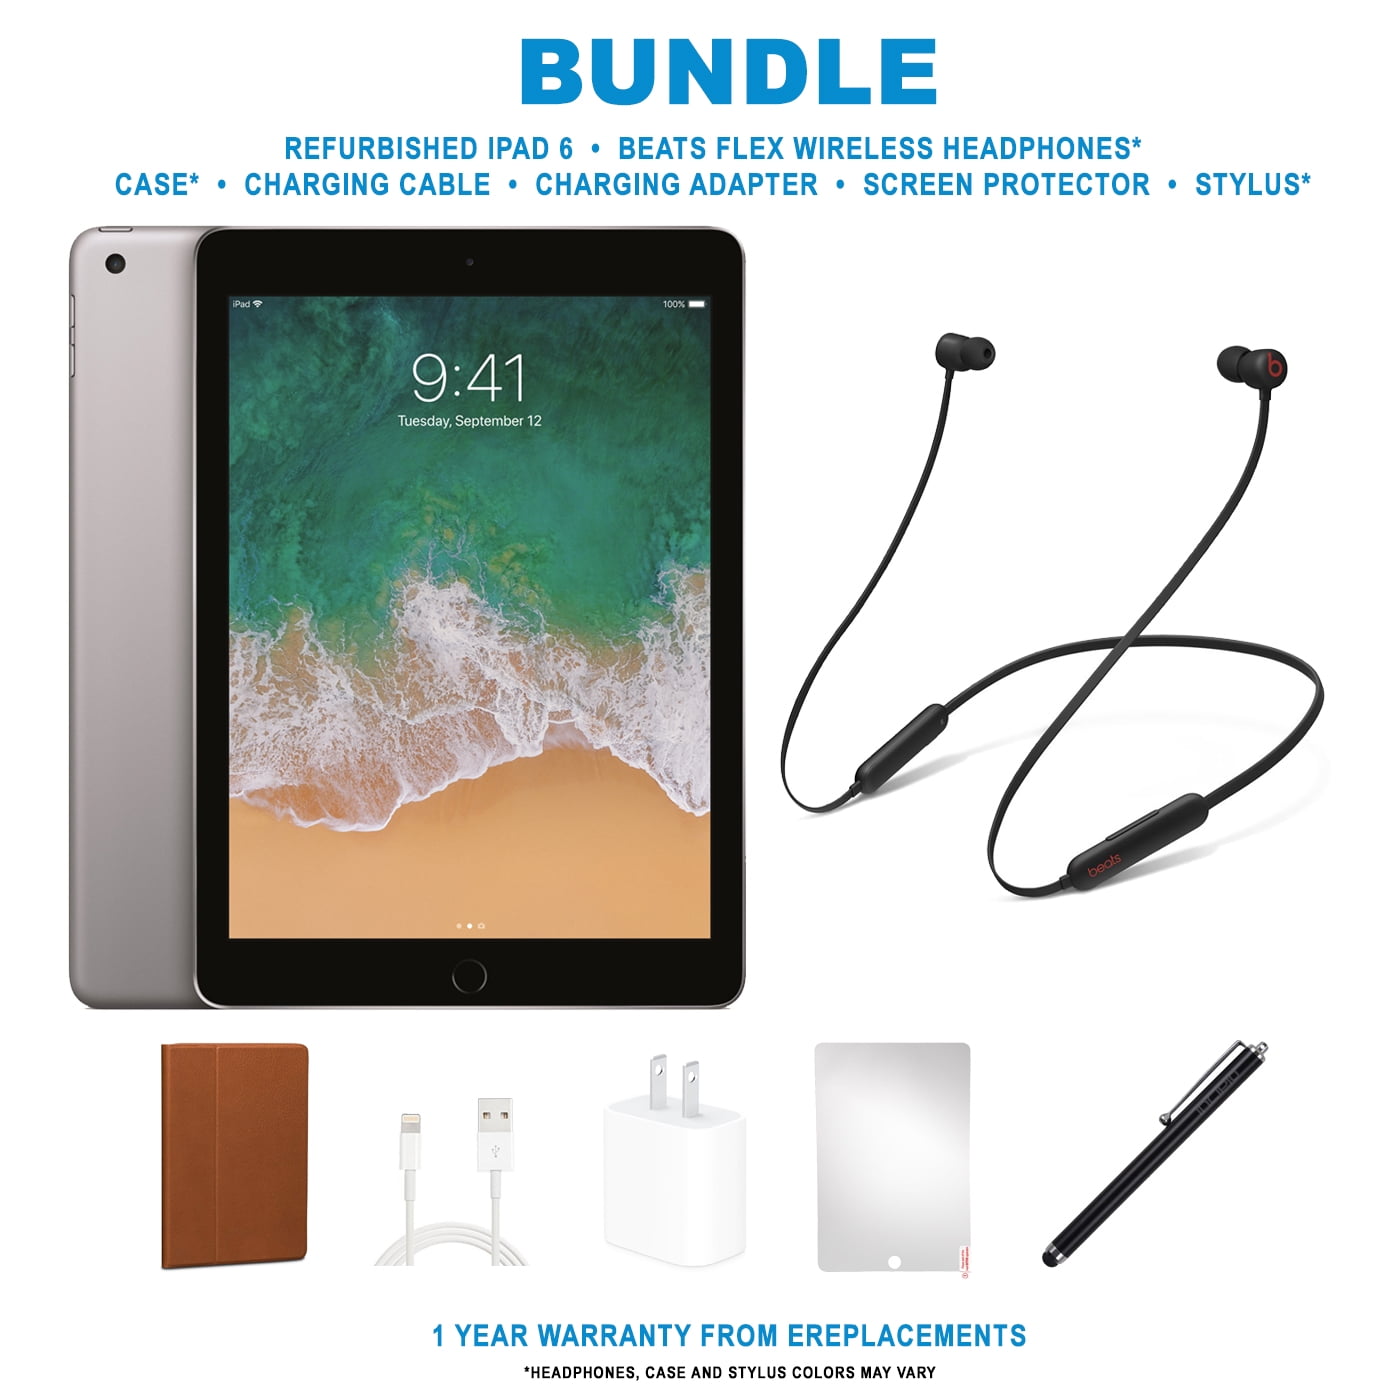 Restored Apple iPad 6 (2018) Bundle, 128GB, Space Gray, Wi-Fi, Beats Flex,  Case, Tempered Glass, Stylus Pen, Charging Accessories (Refurbished)